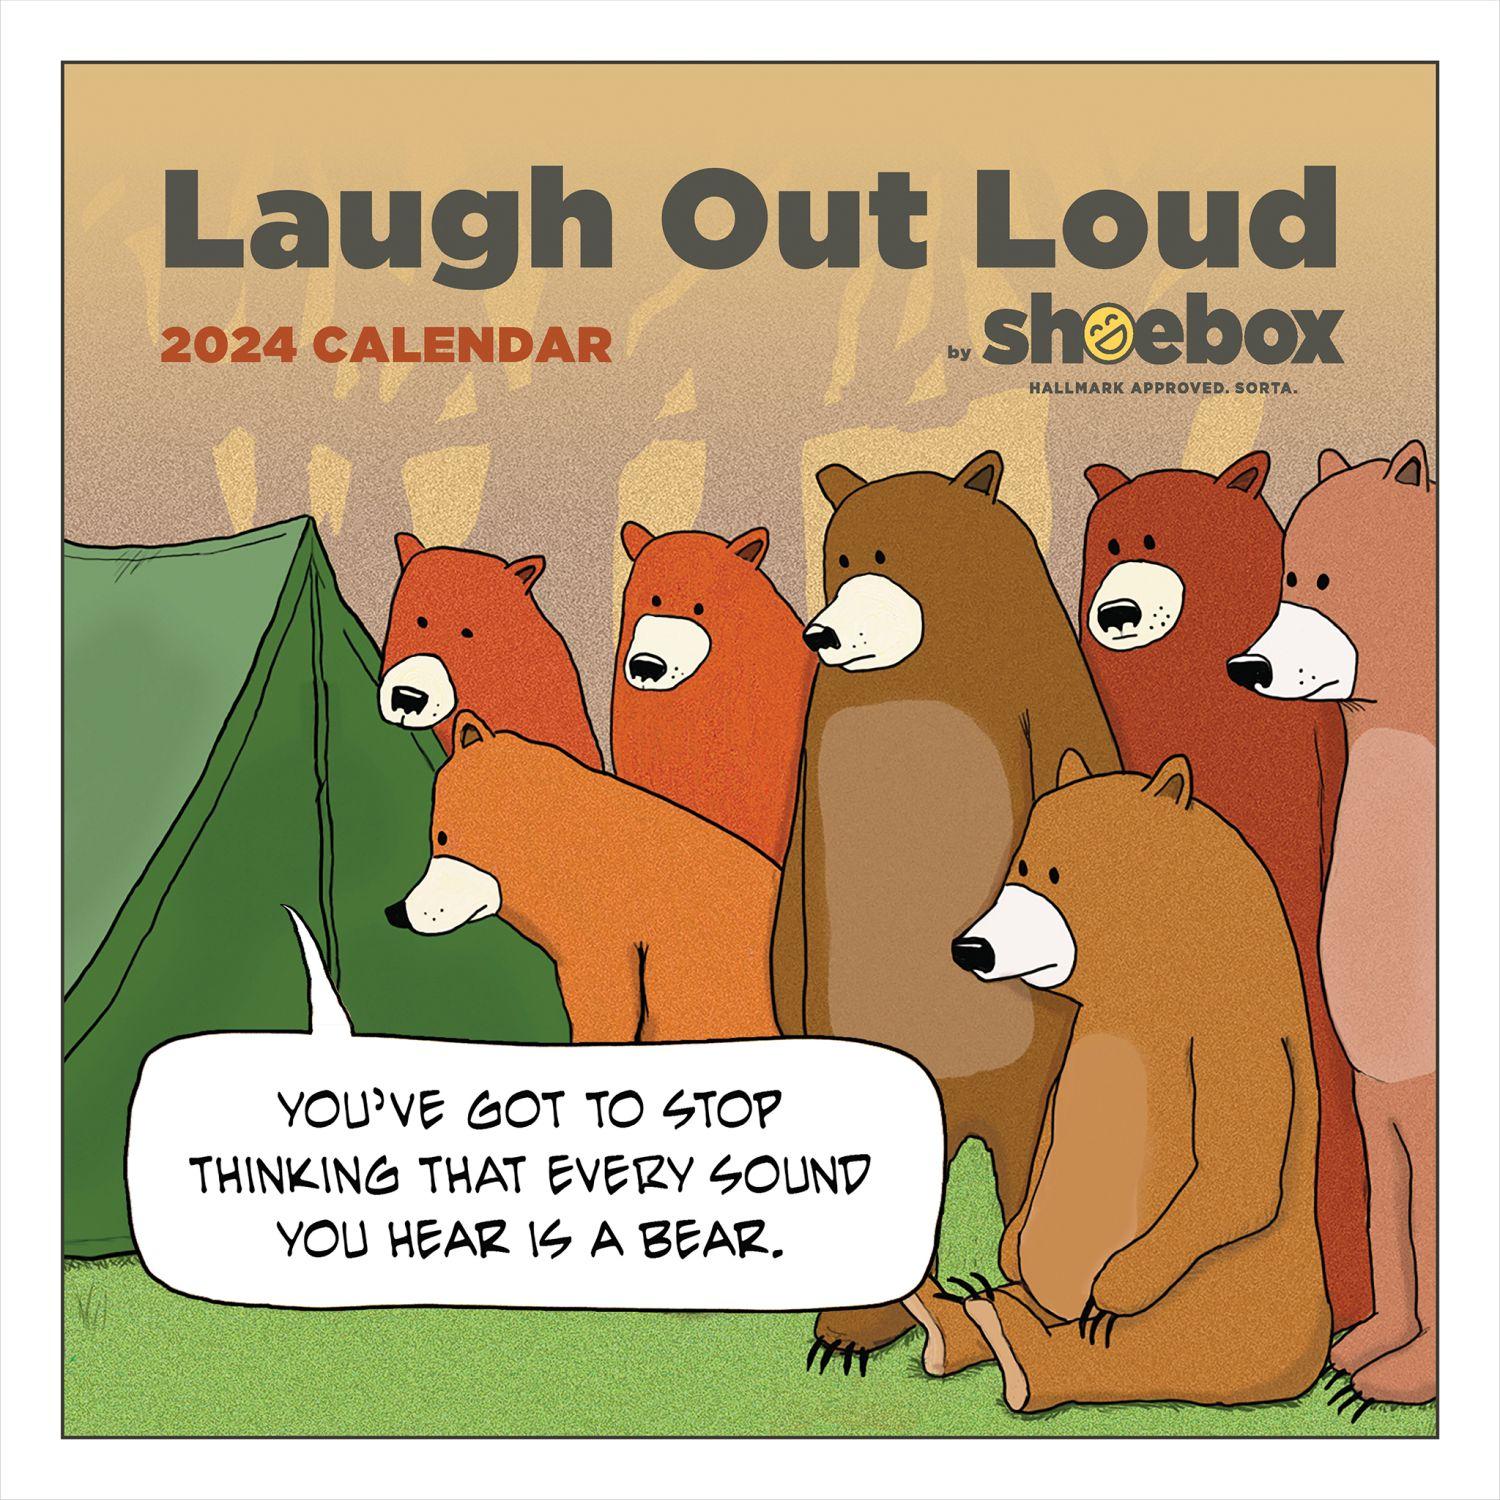 Laugh Out Loud by Shoebox 2024 Wall Calendar